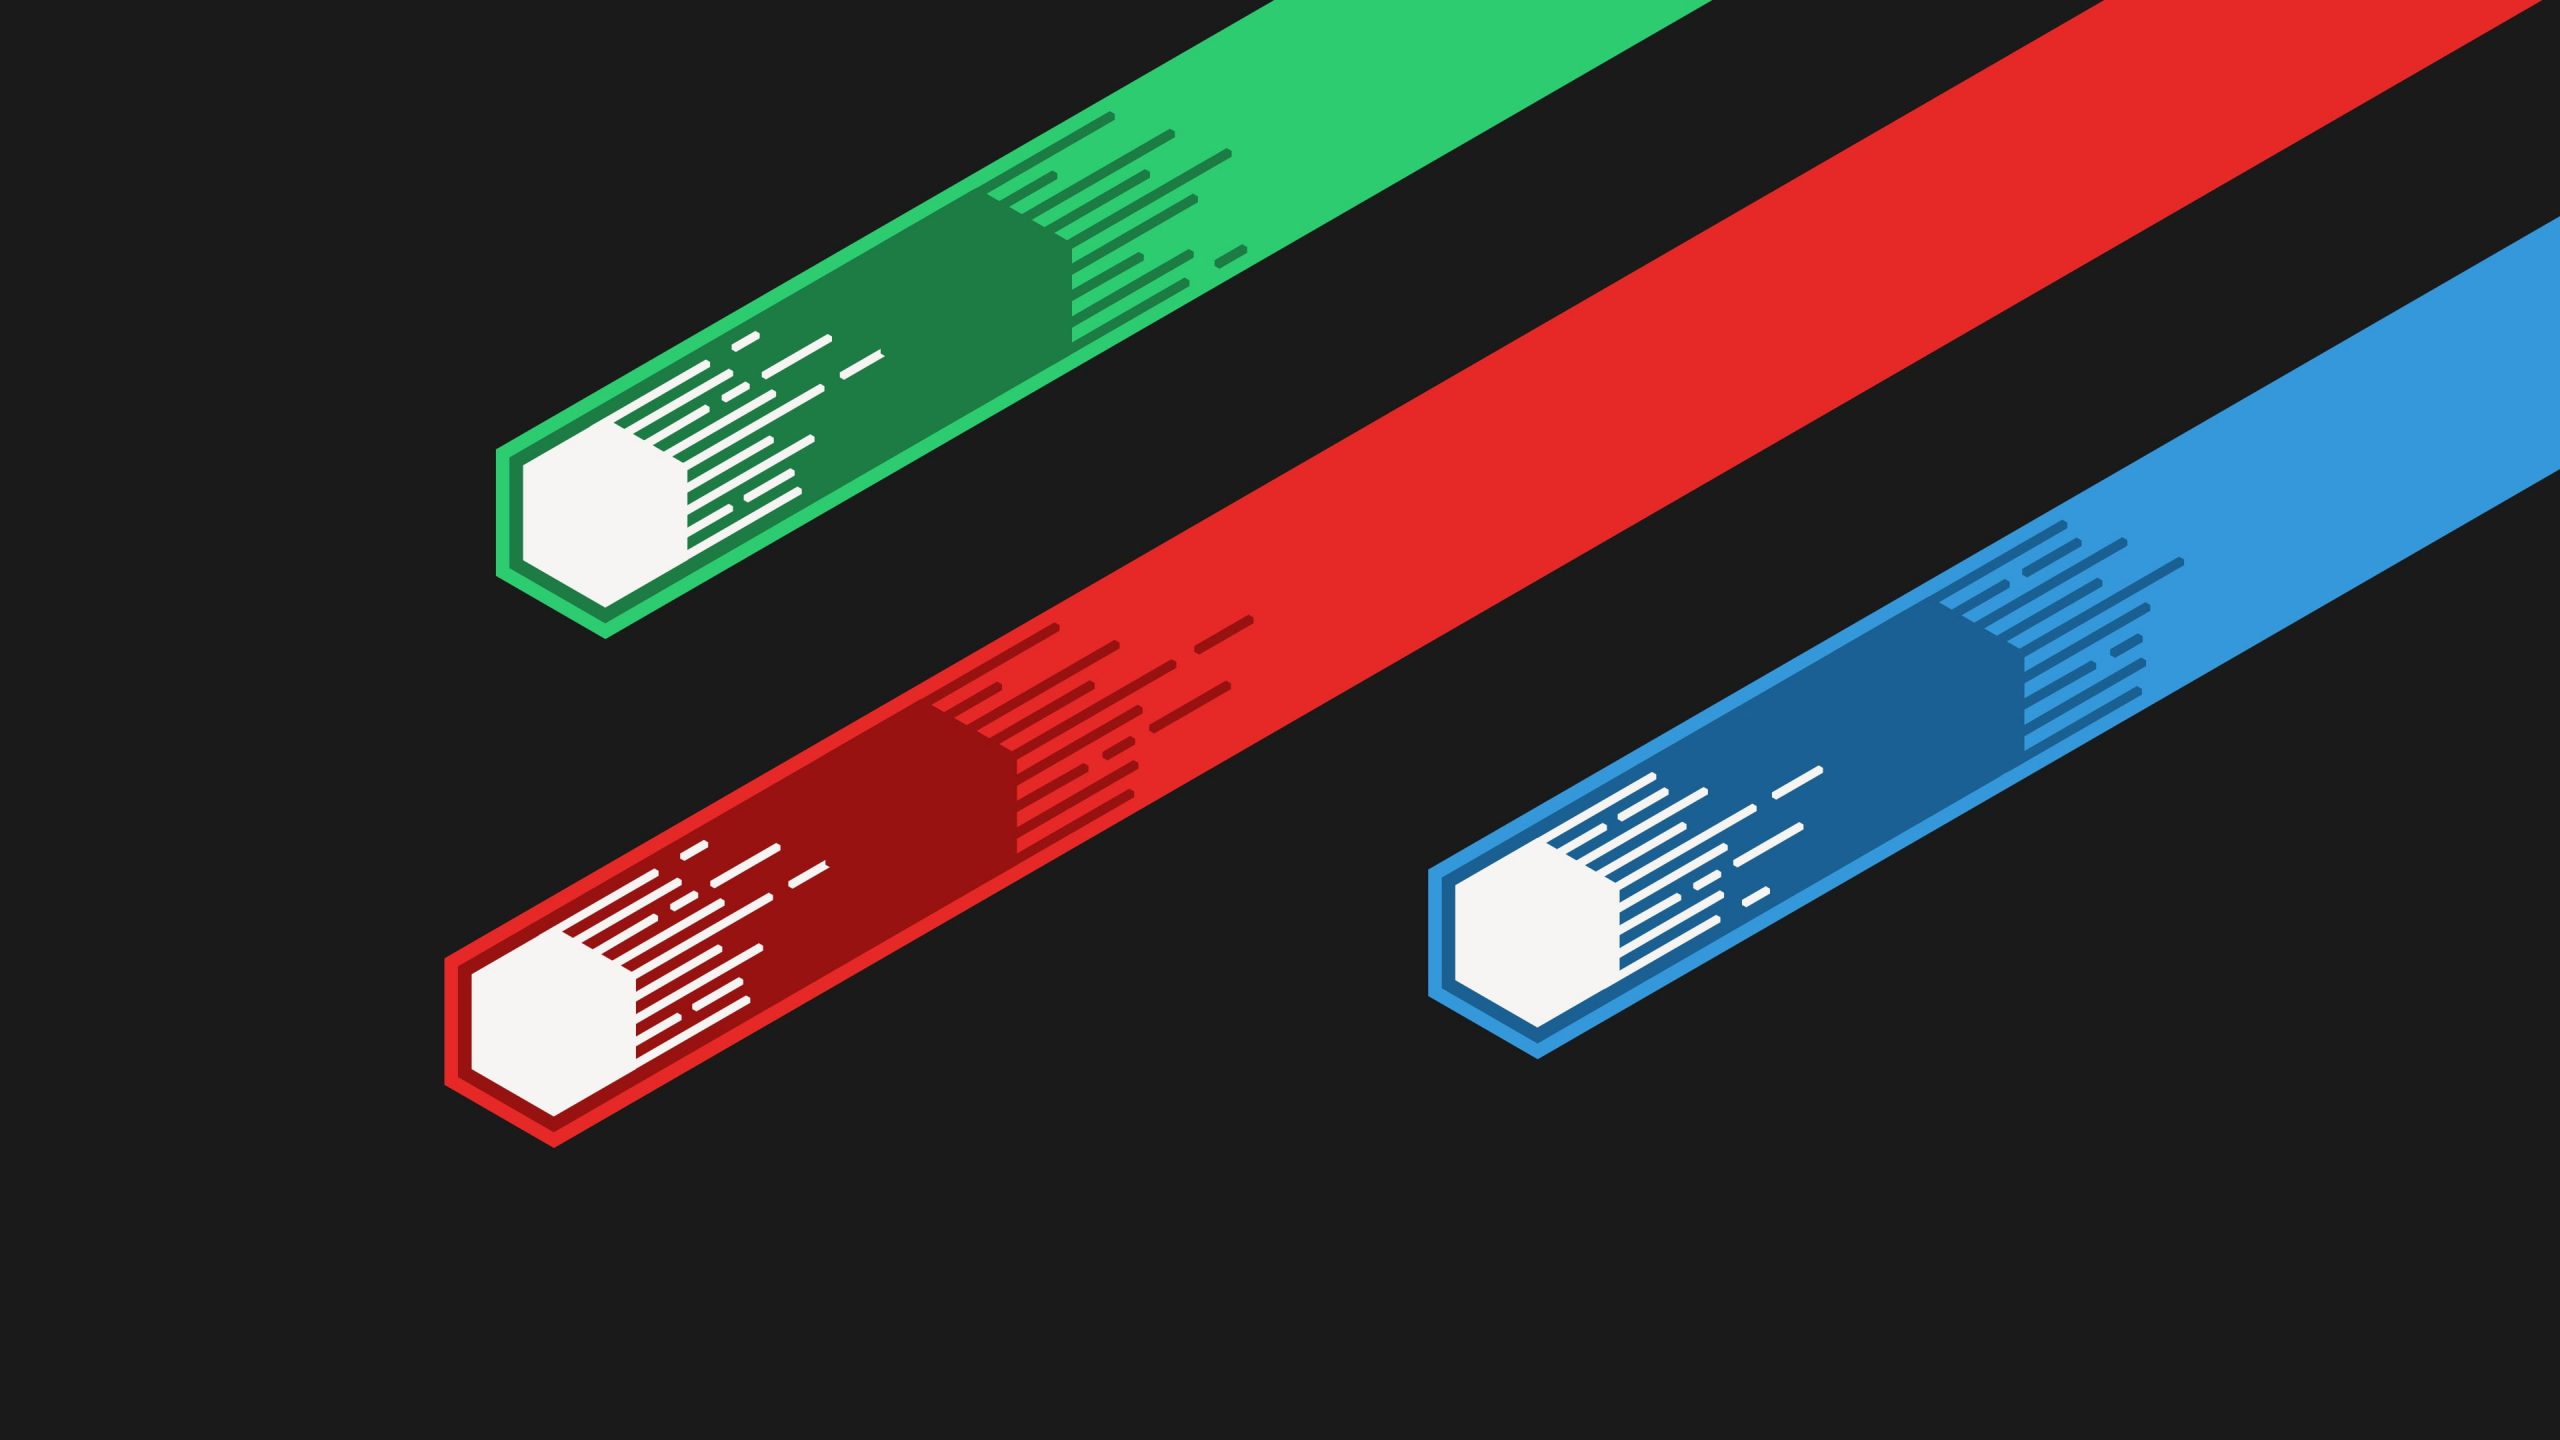 Three green wallpaper, red, and blue stripe logo, meteors, Flatdesign, simple background